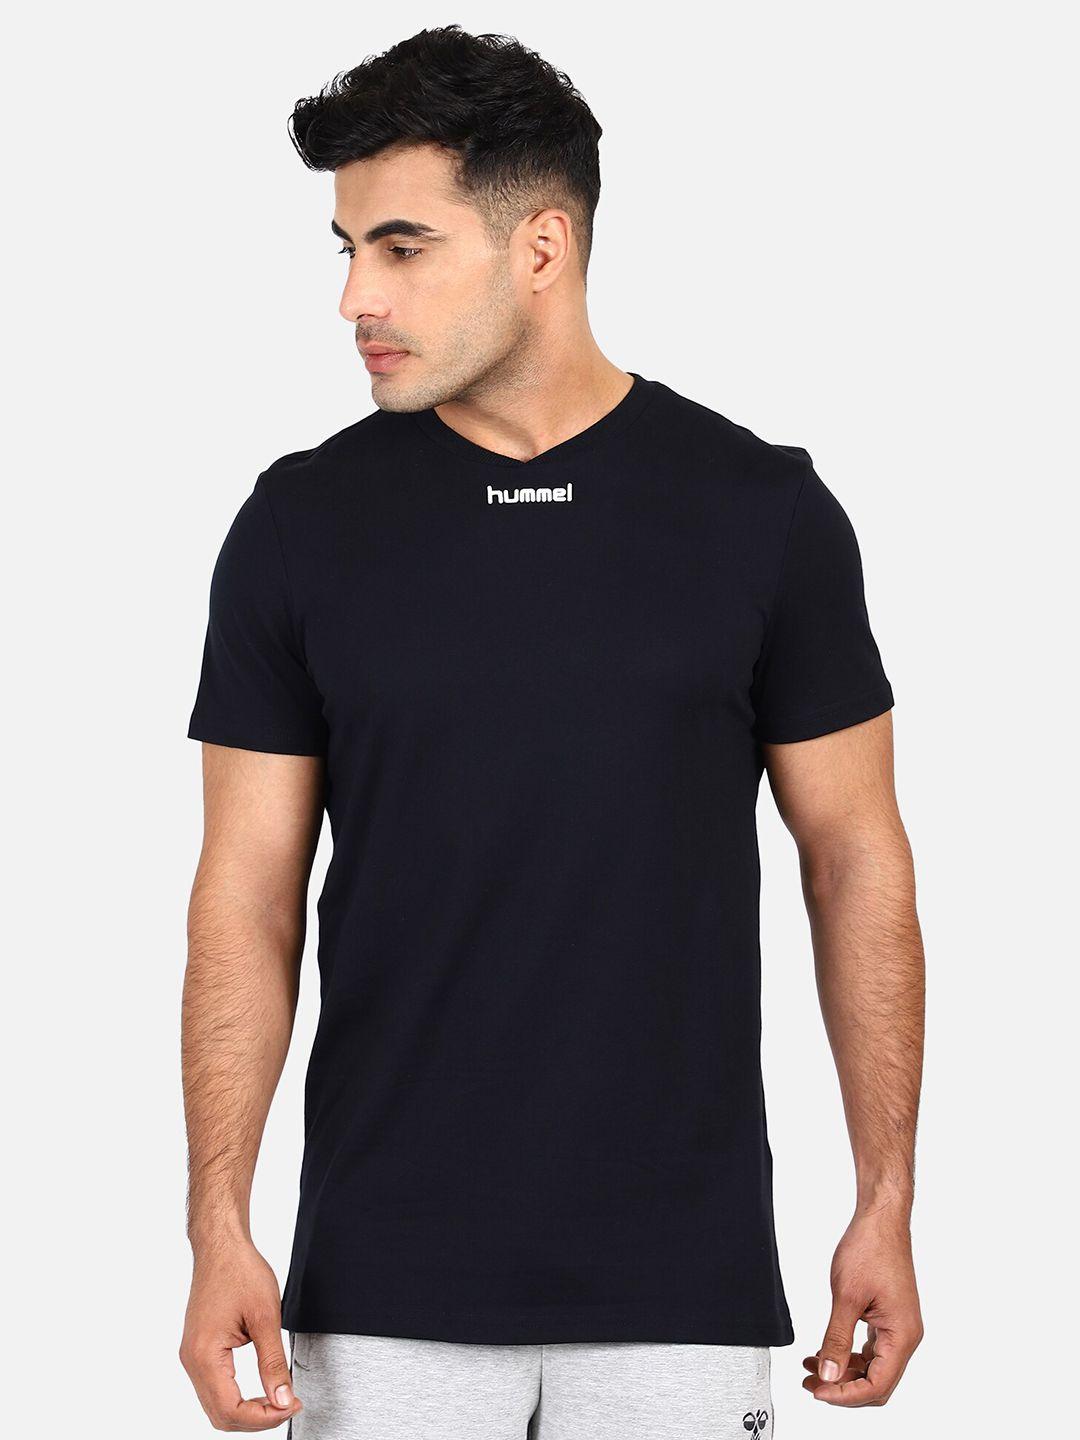 hummel men black solid cotton t-shirt